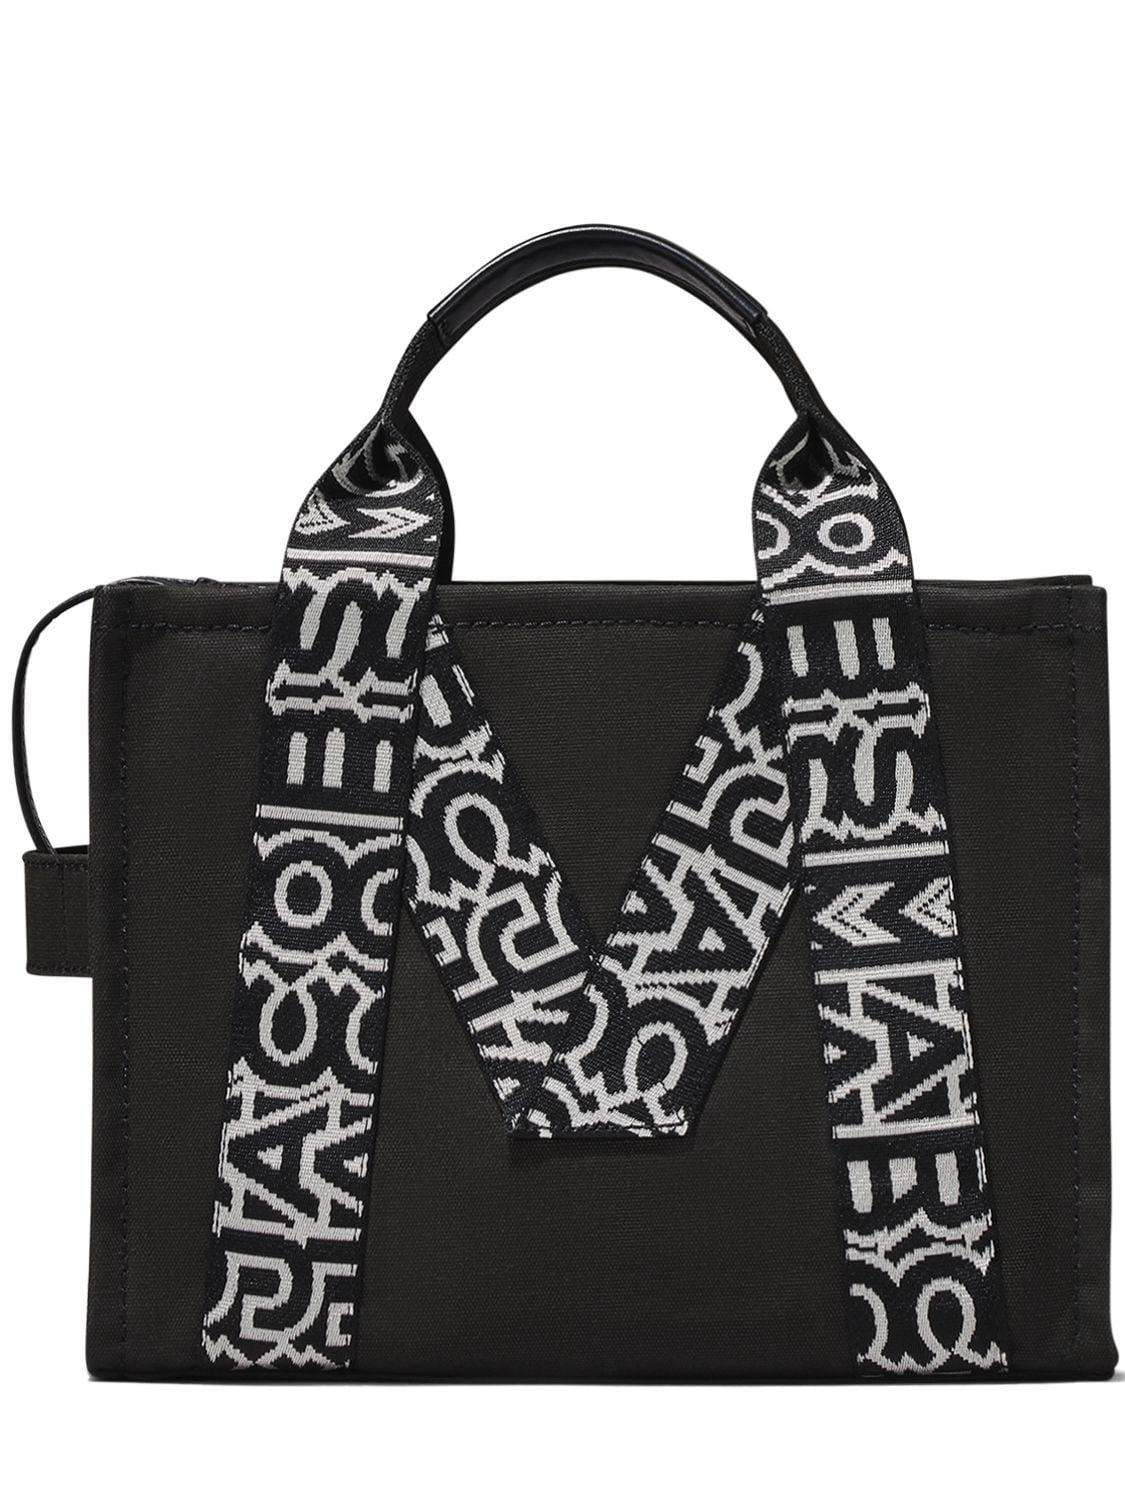 Marc Jacobs The M Medium Tote Bag in Black